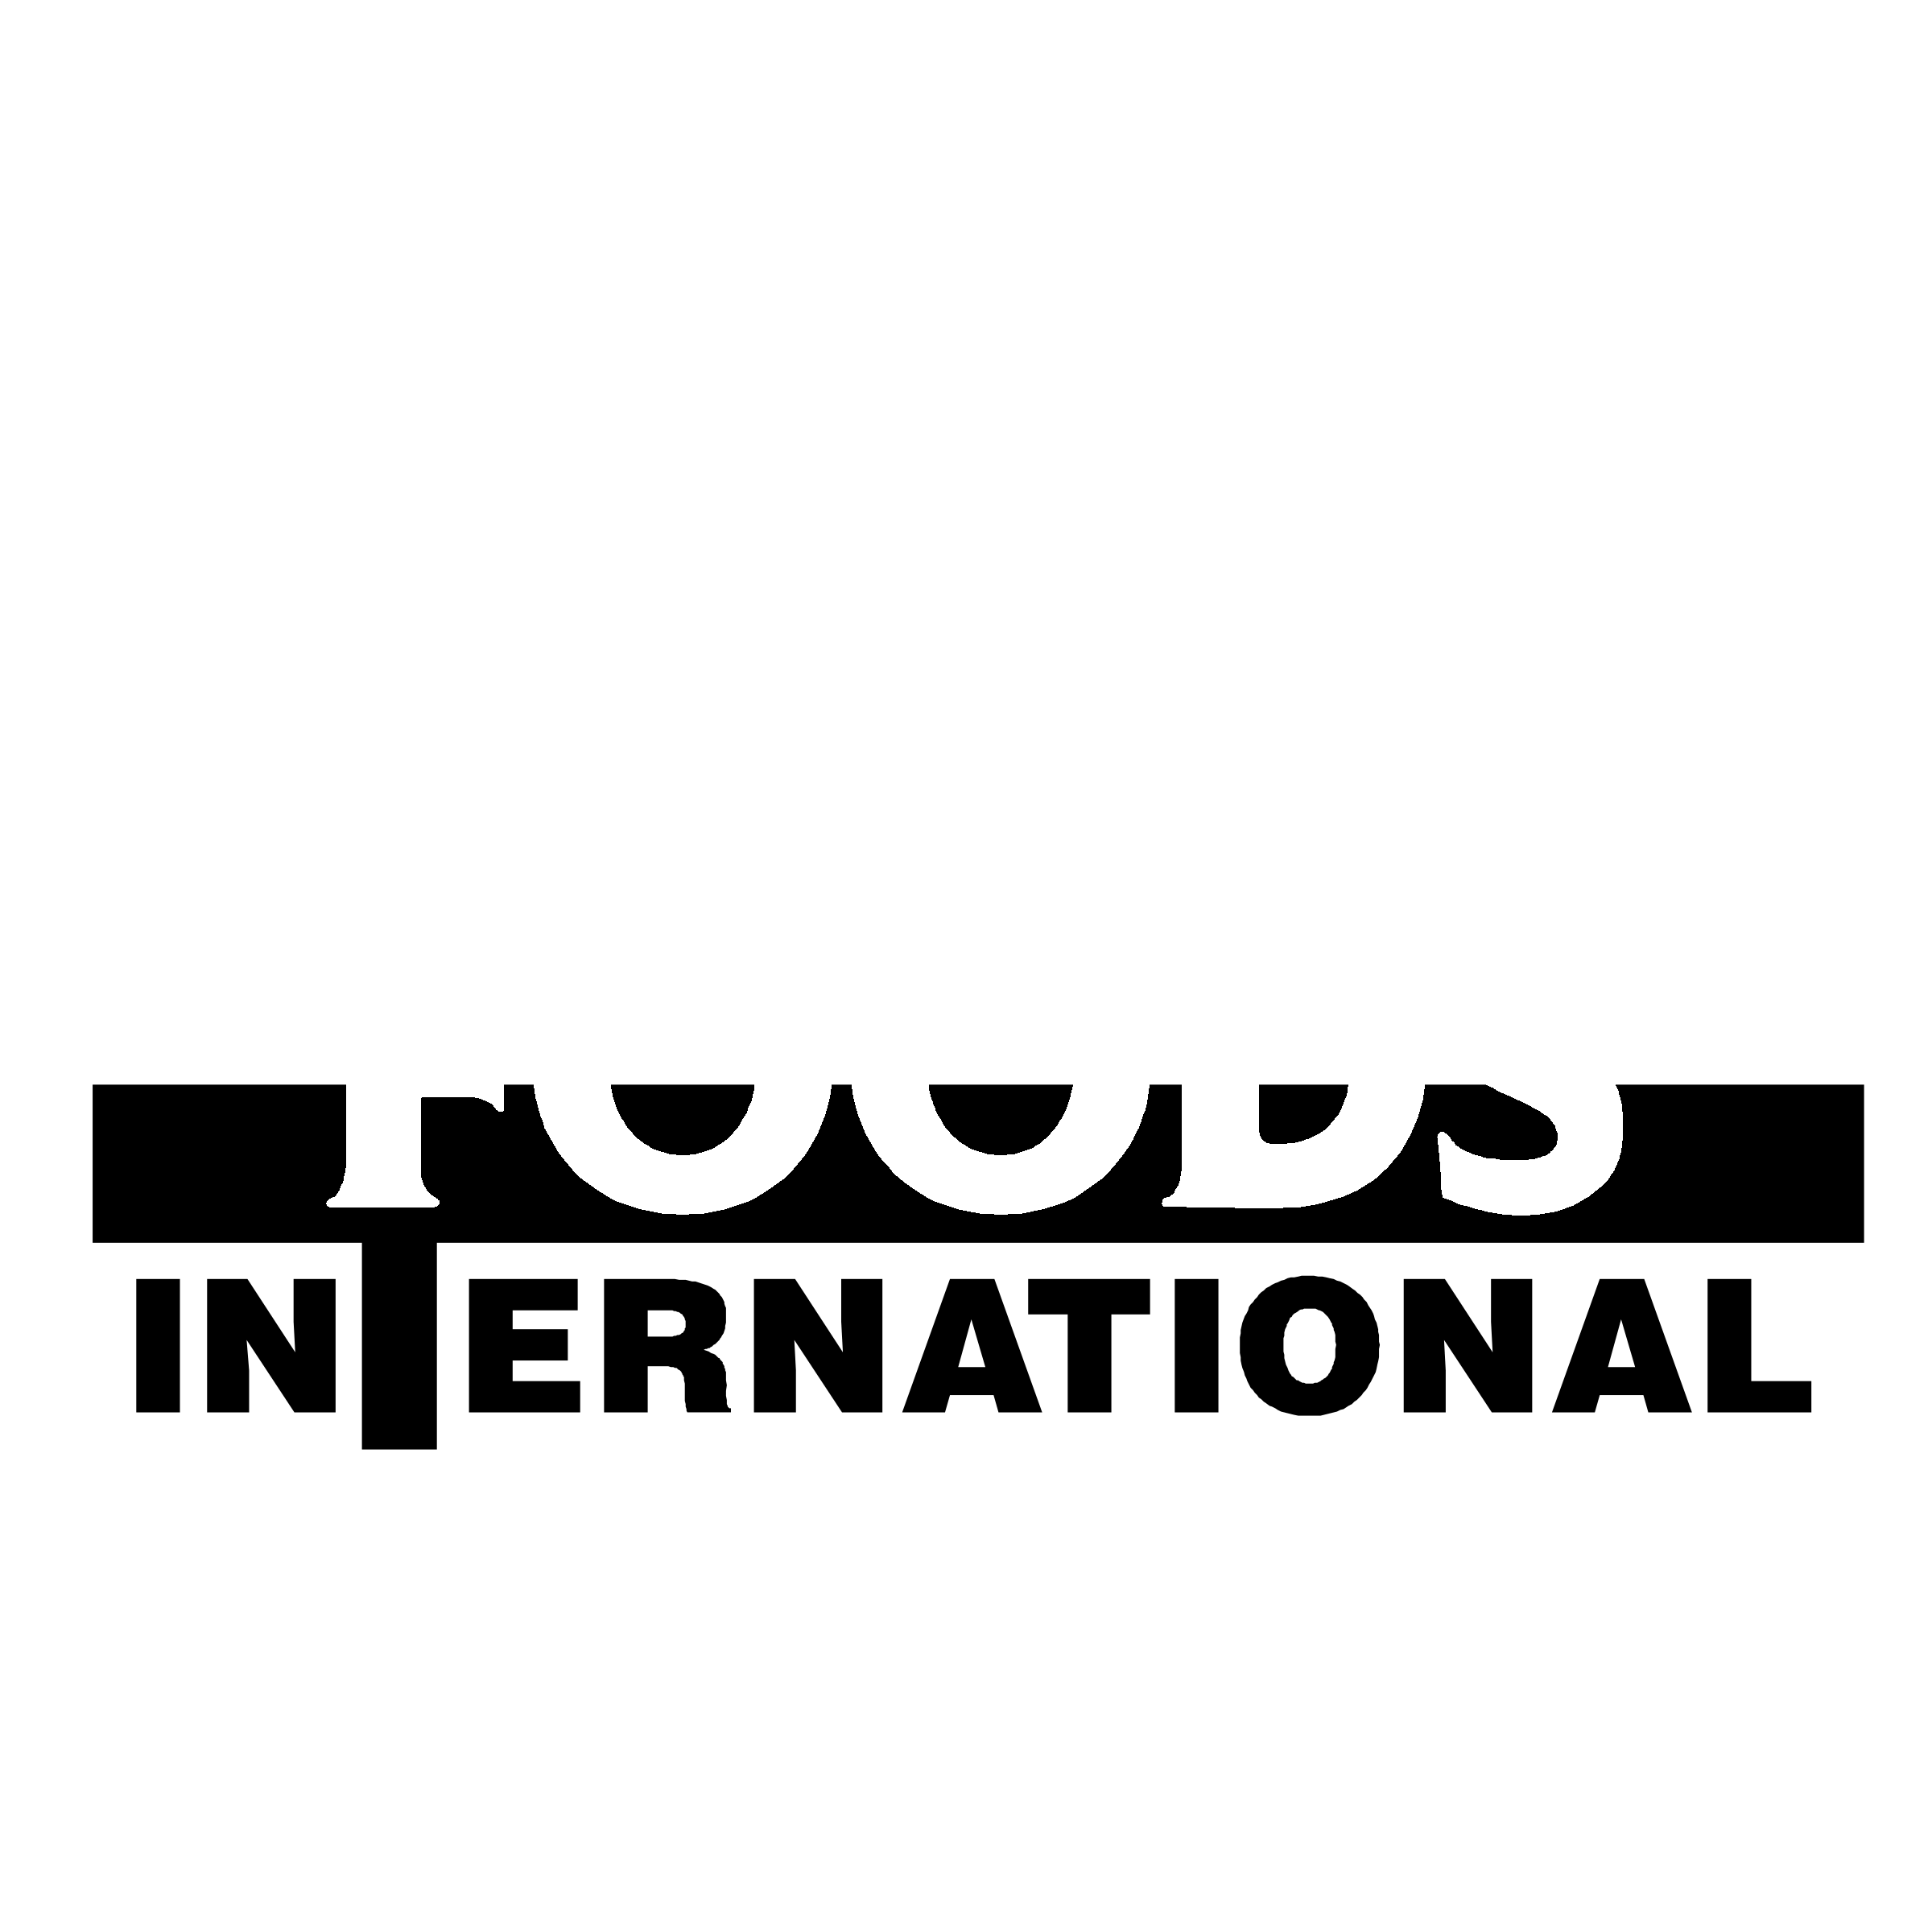 Century Foods Logo - Century Foods International Logo PNG Transparent & SVG Vector ...